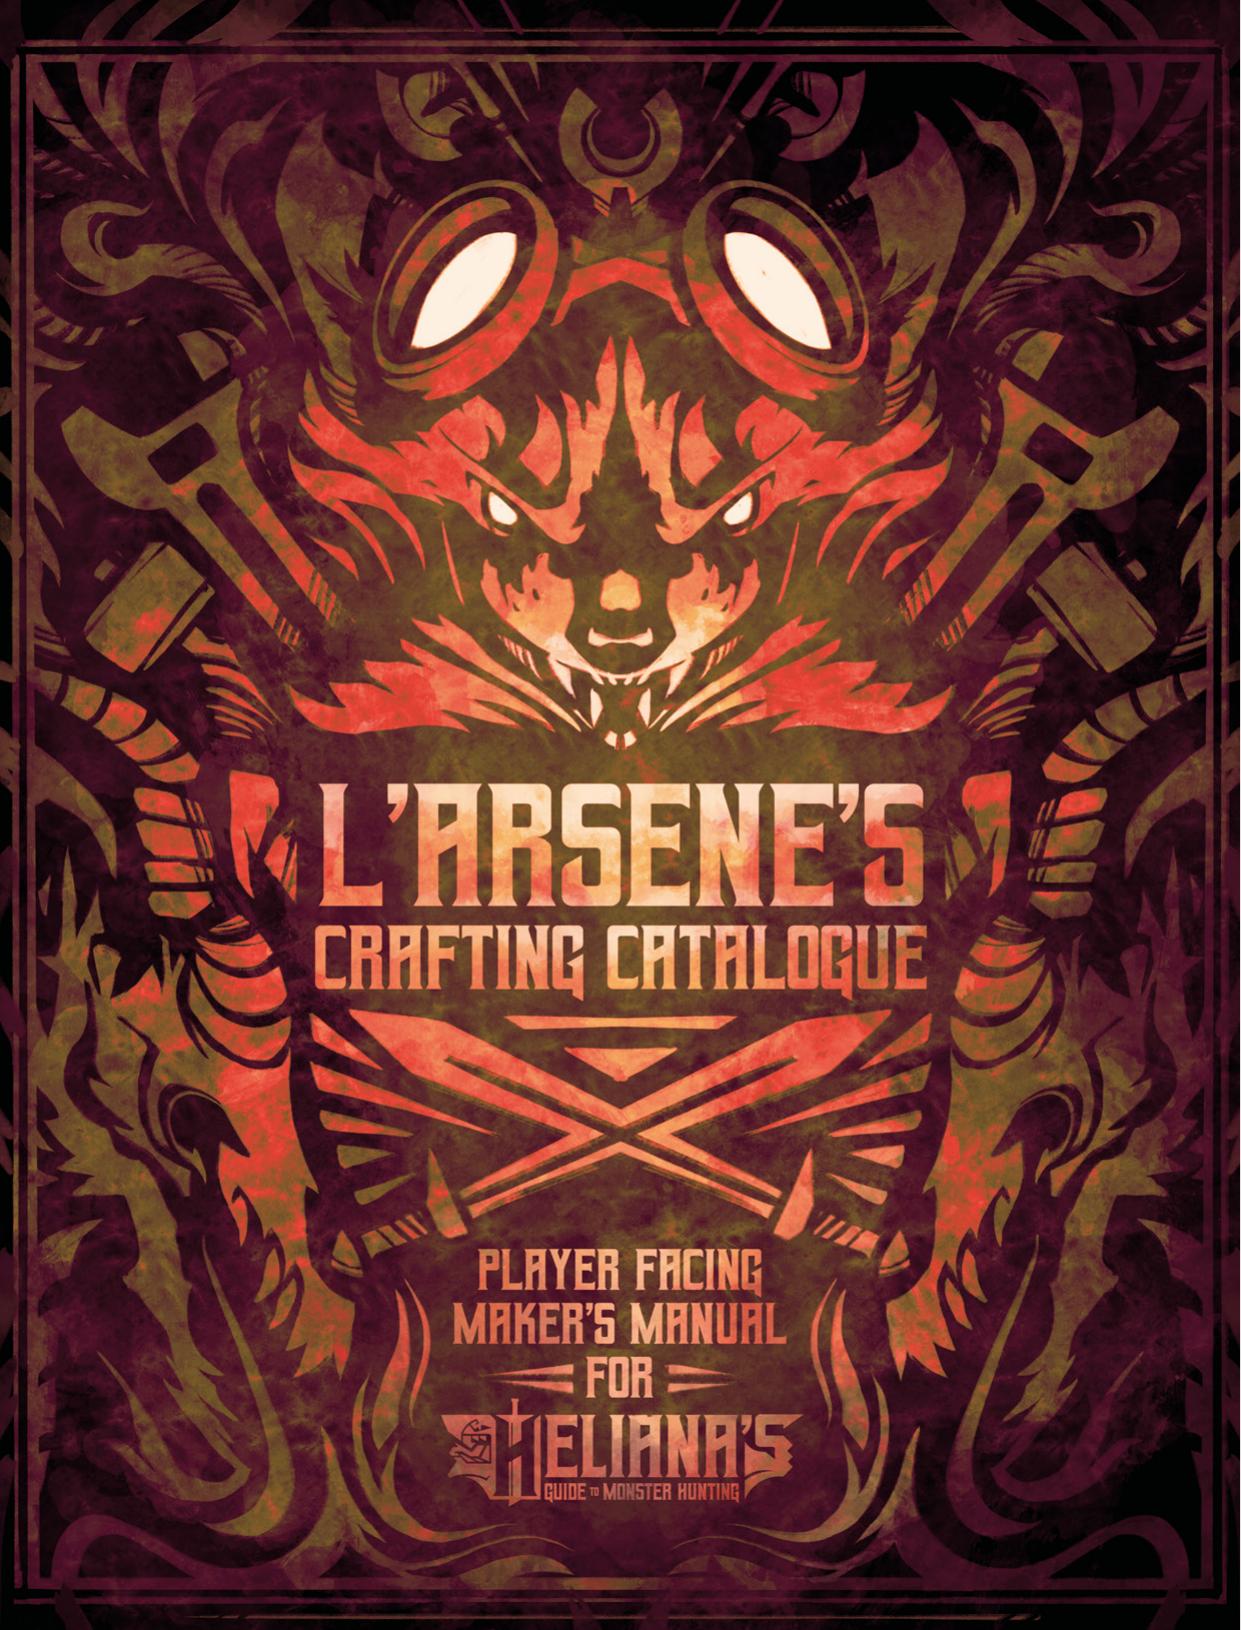 L'Arsene's Crafting Catalogue